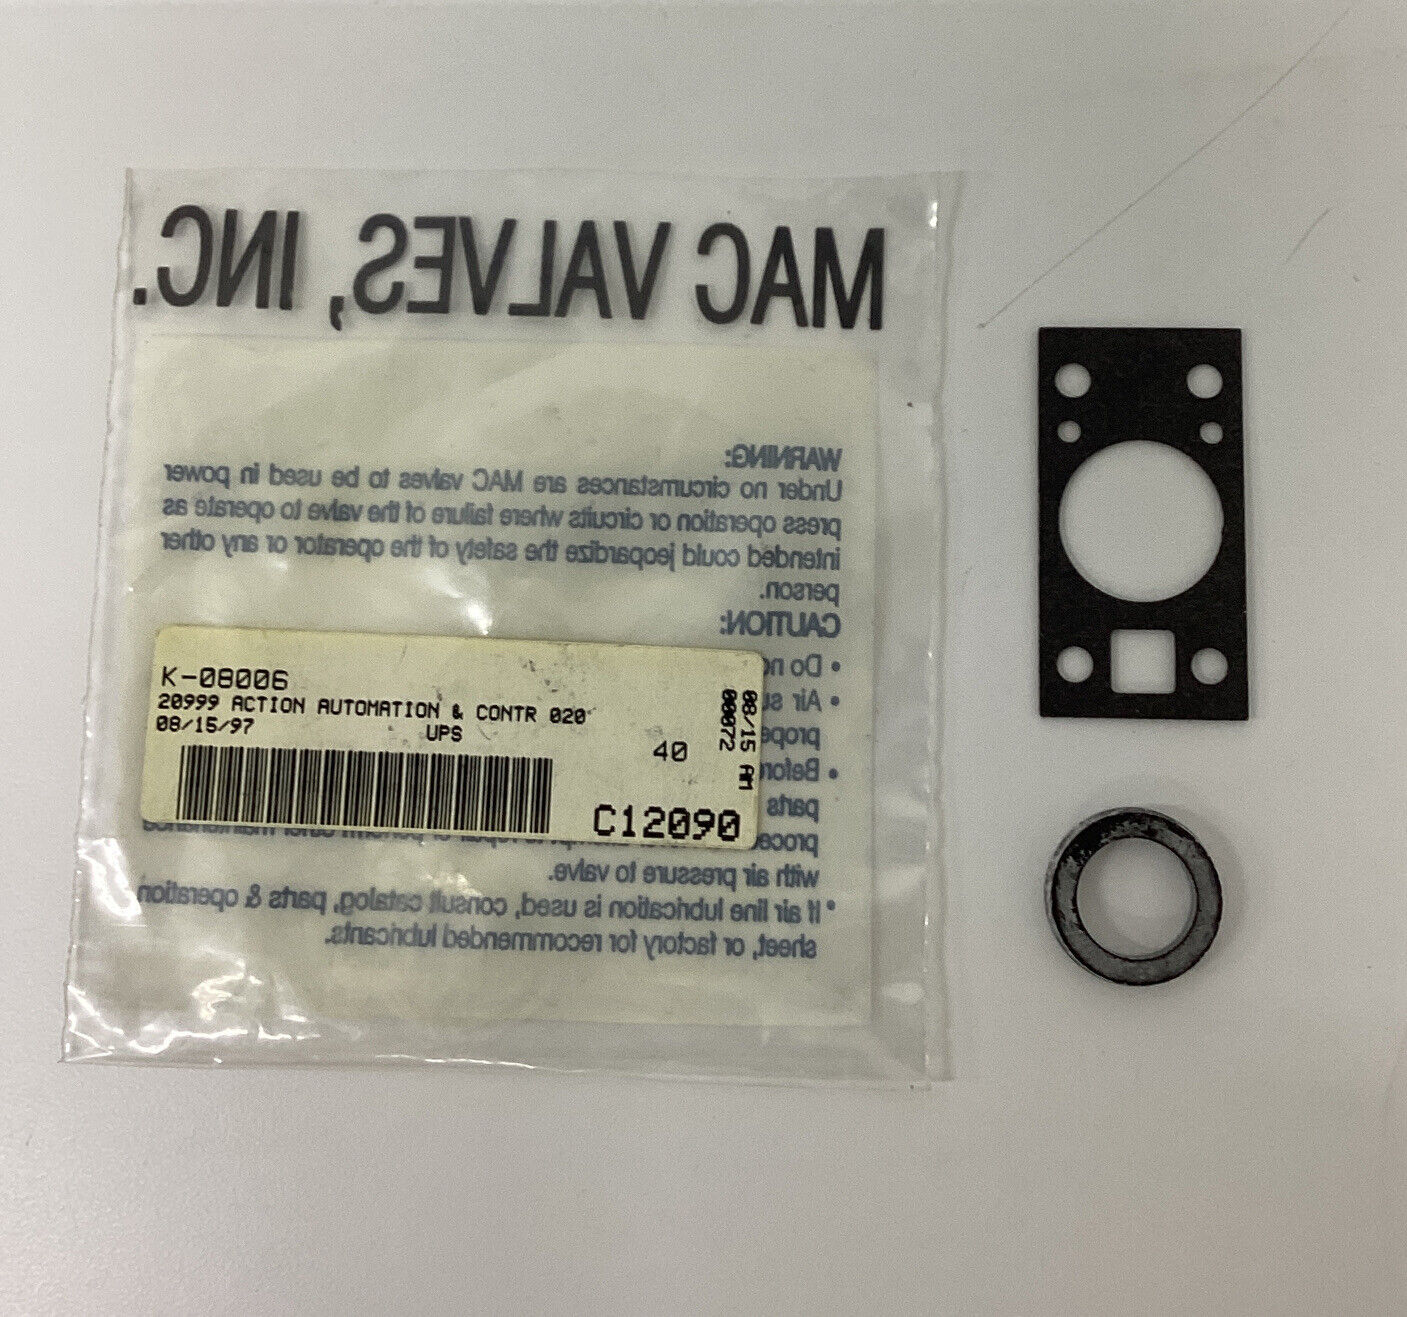 MAC Valves K-08006 Seal & Gasket Kit (CL288) - 0